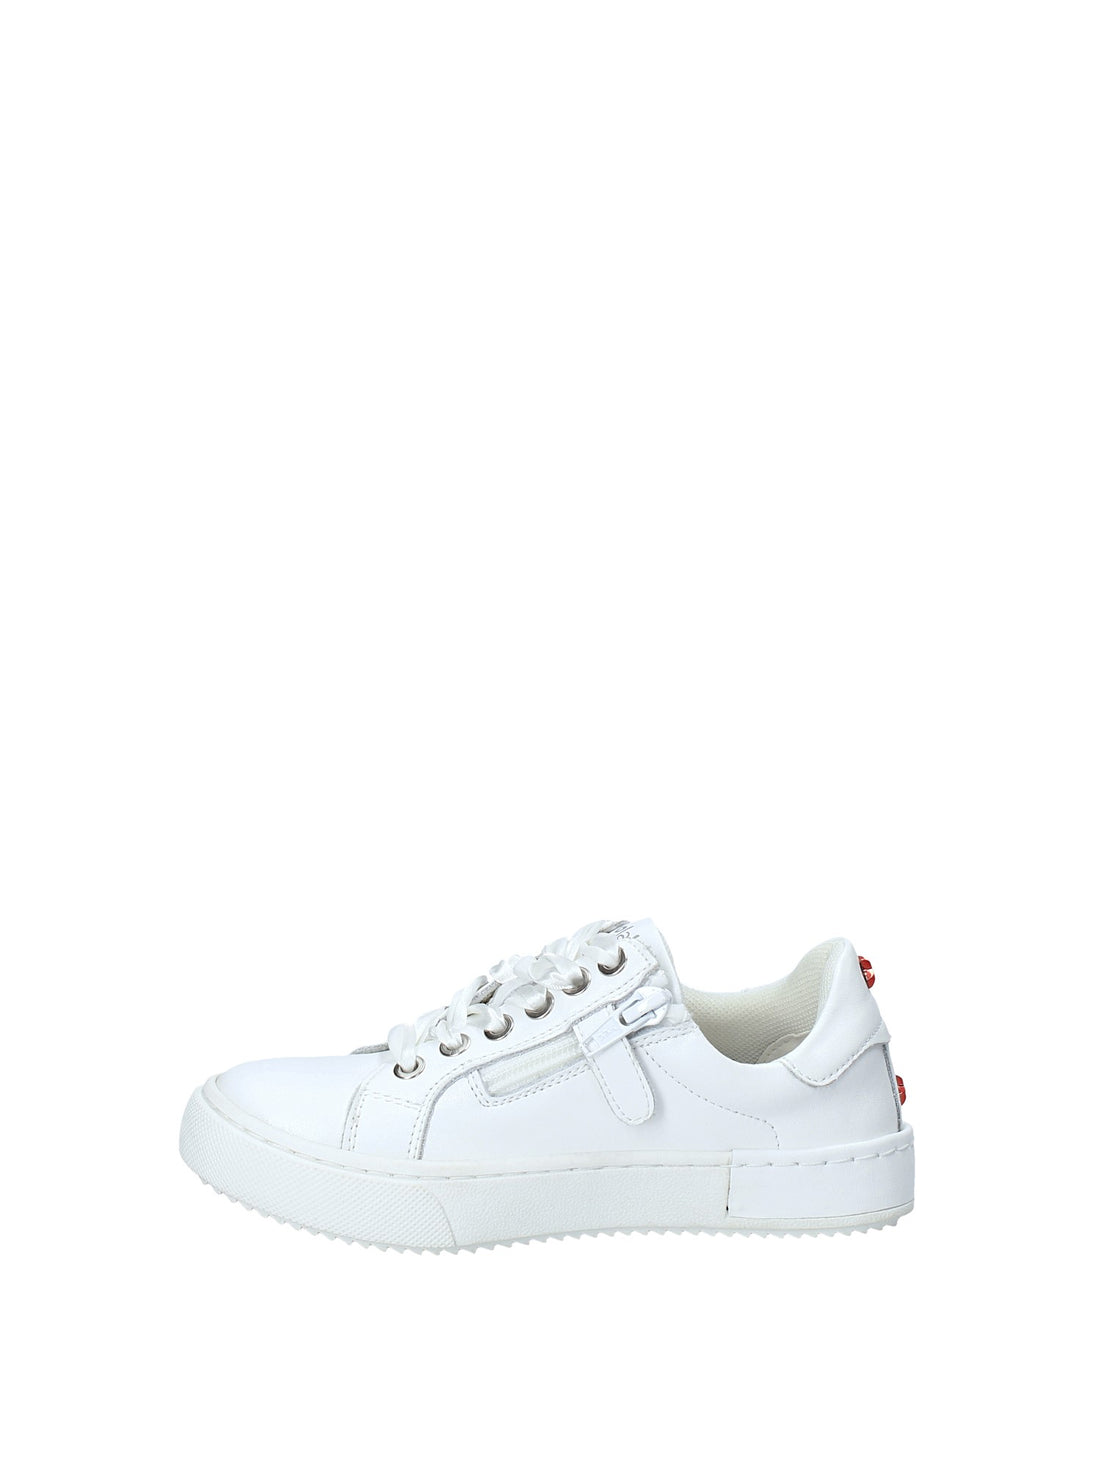 Sneakers Bianco Holalà